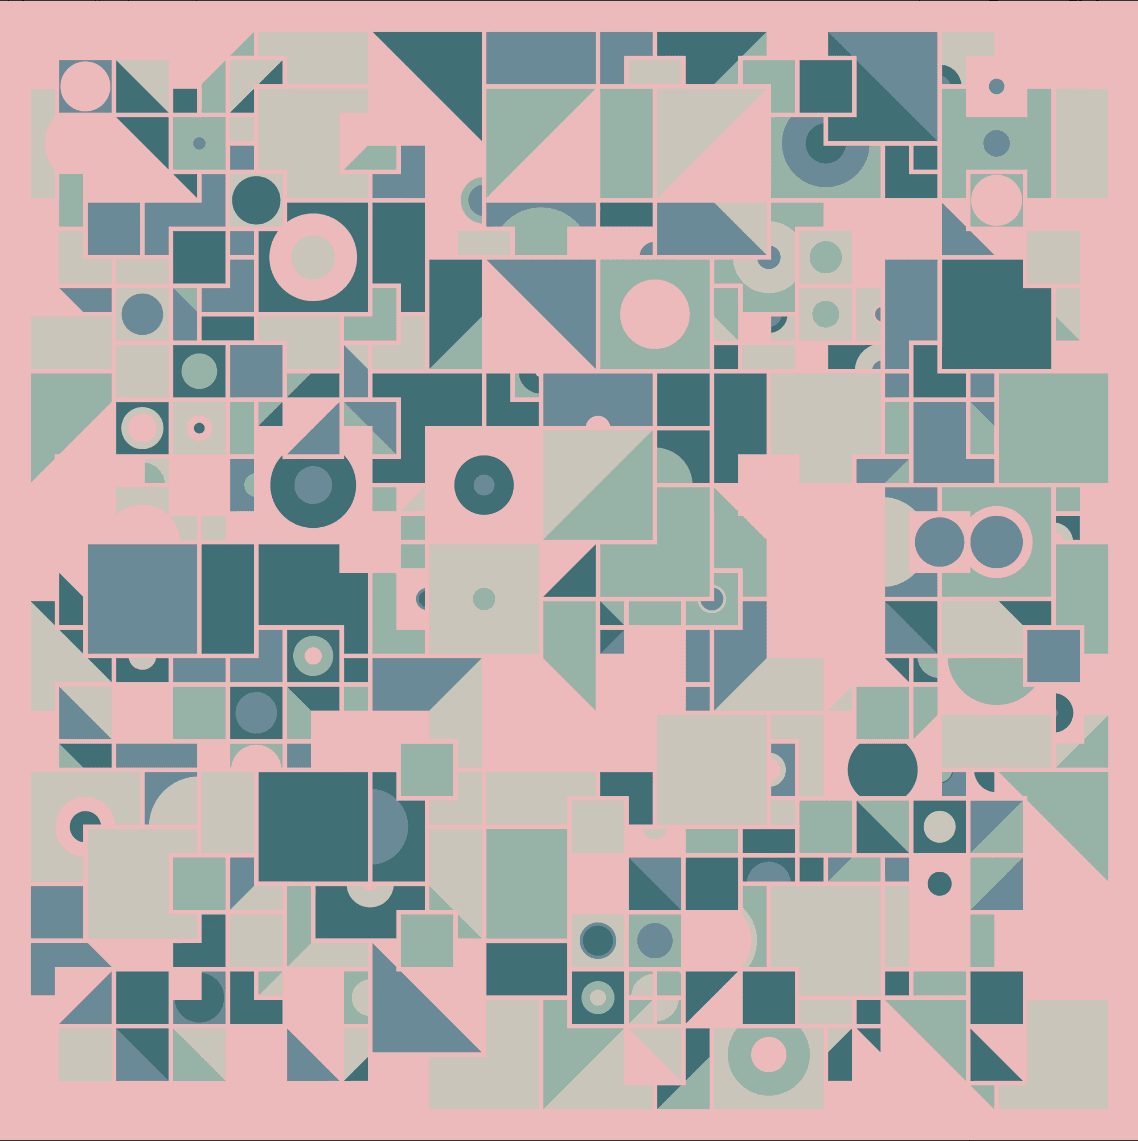 Pixel Blocks